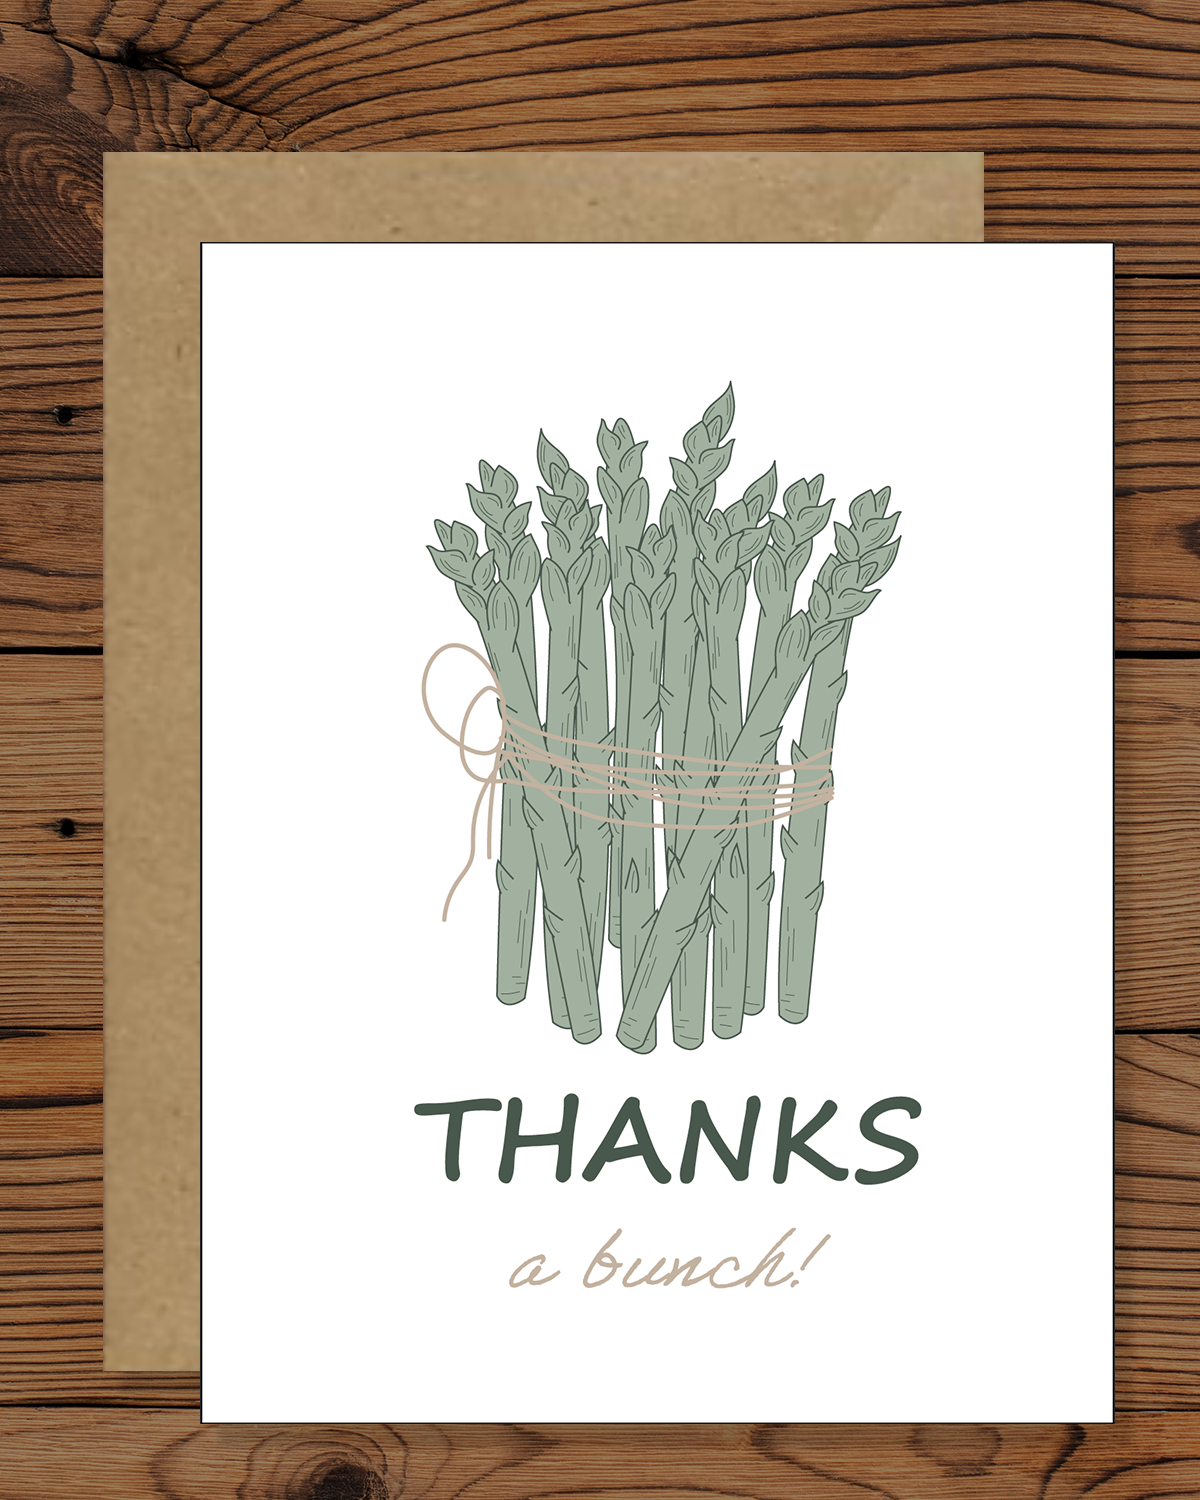 Asparagus Greeting Card| Veggie Greeting Cards | Garden Greeting Cards